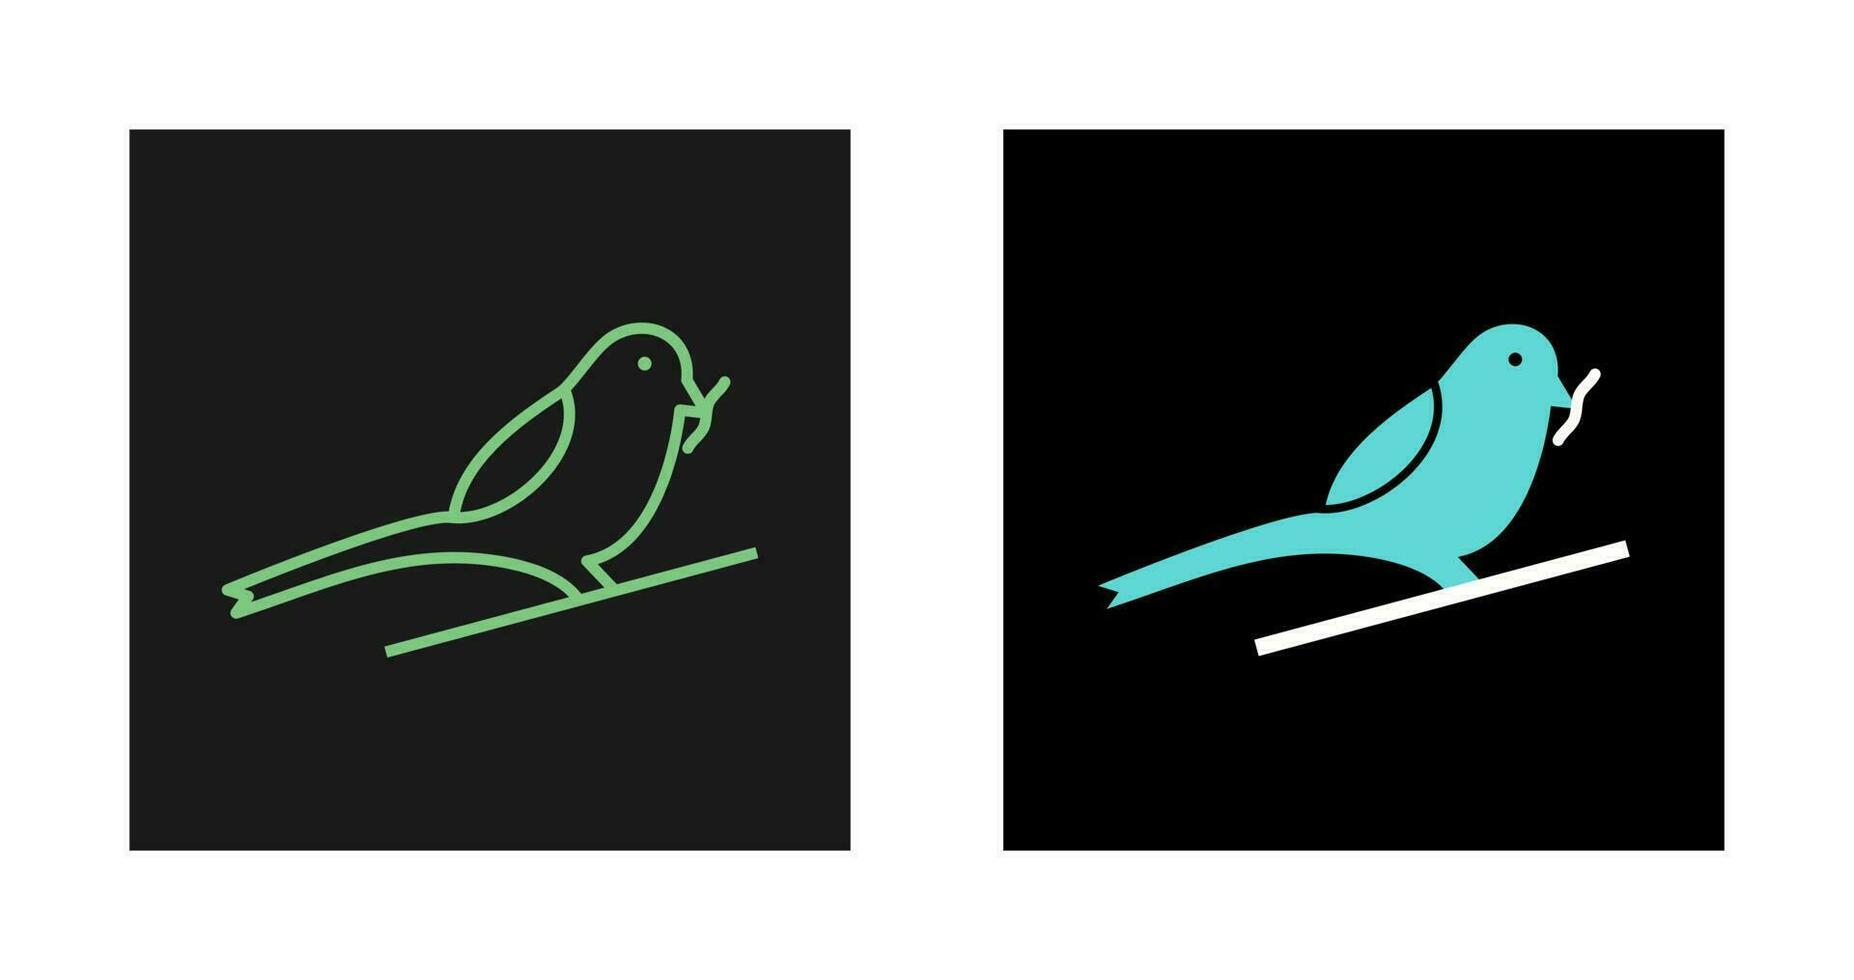 Vektorsymbol für Vogel, der Wurm frisst vektor